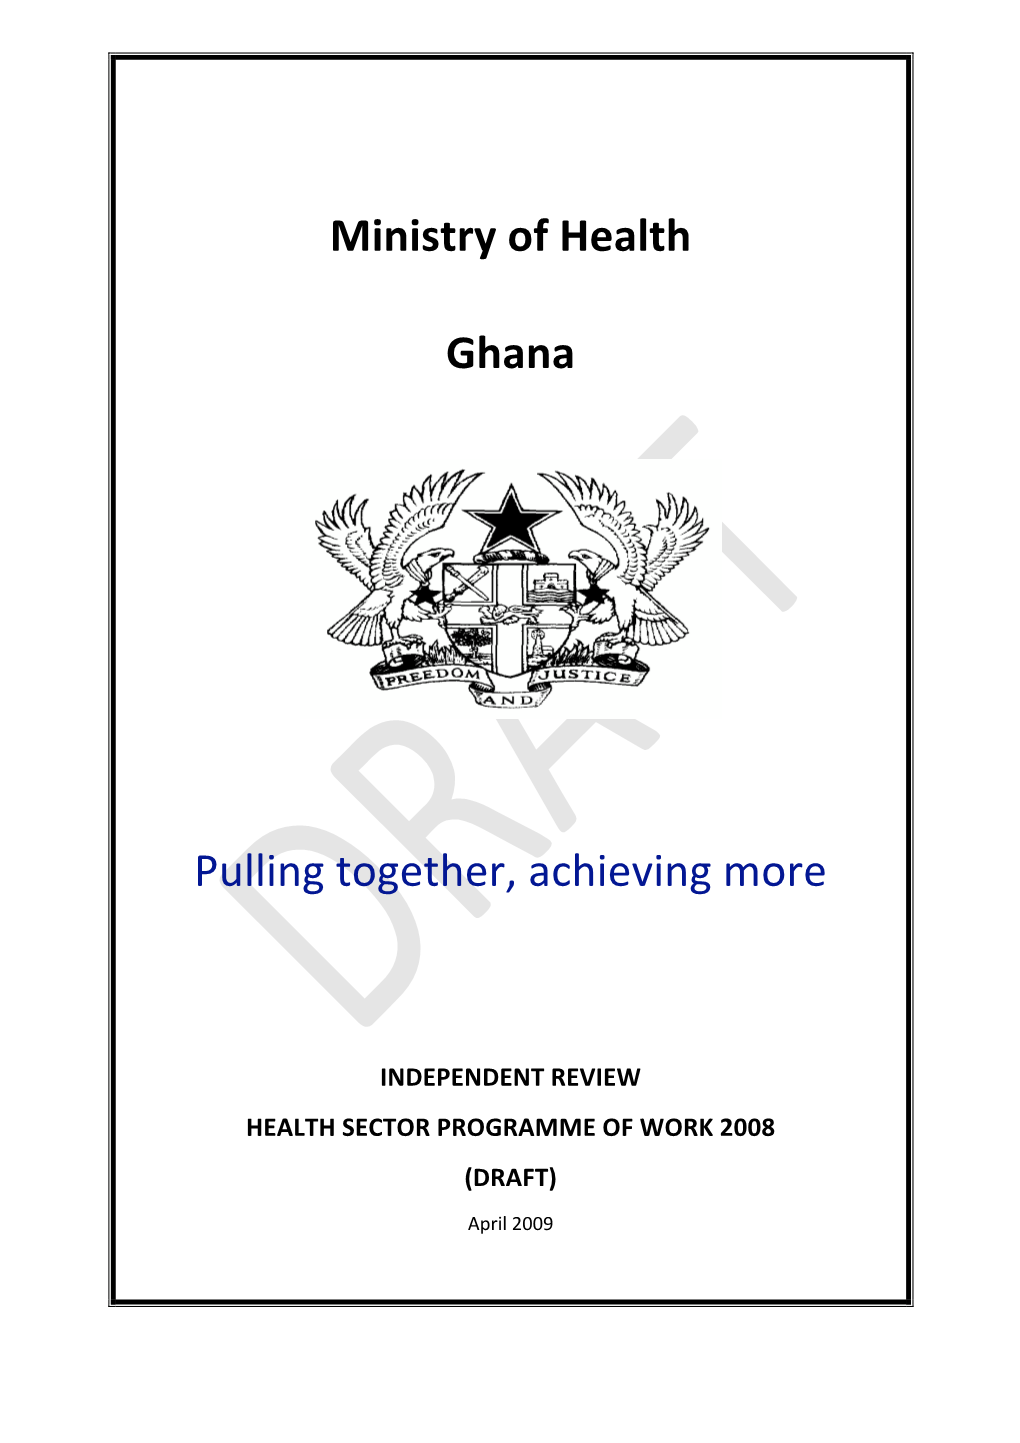 Ministry of Health Ghana